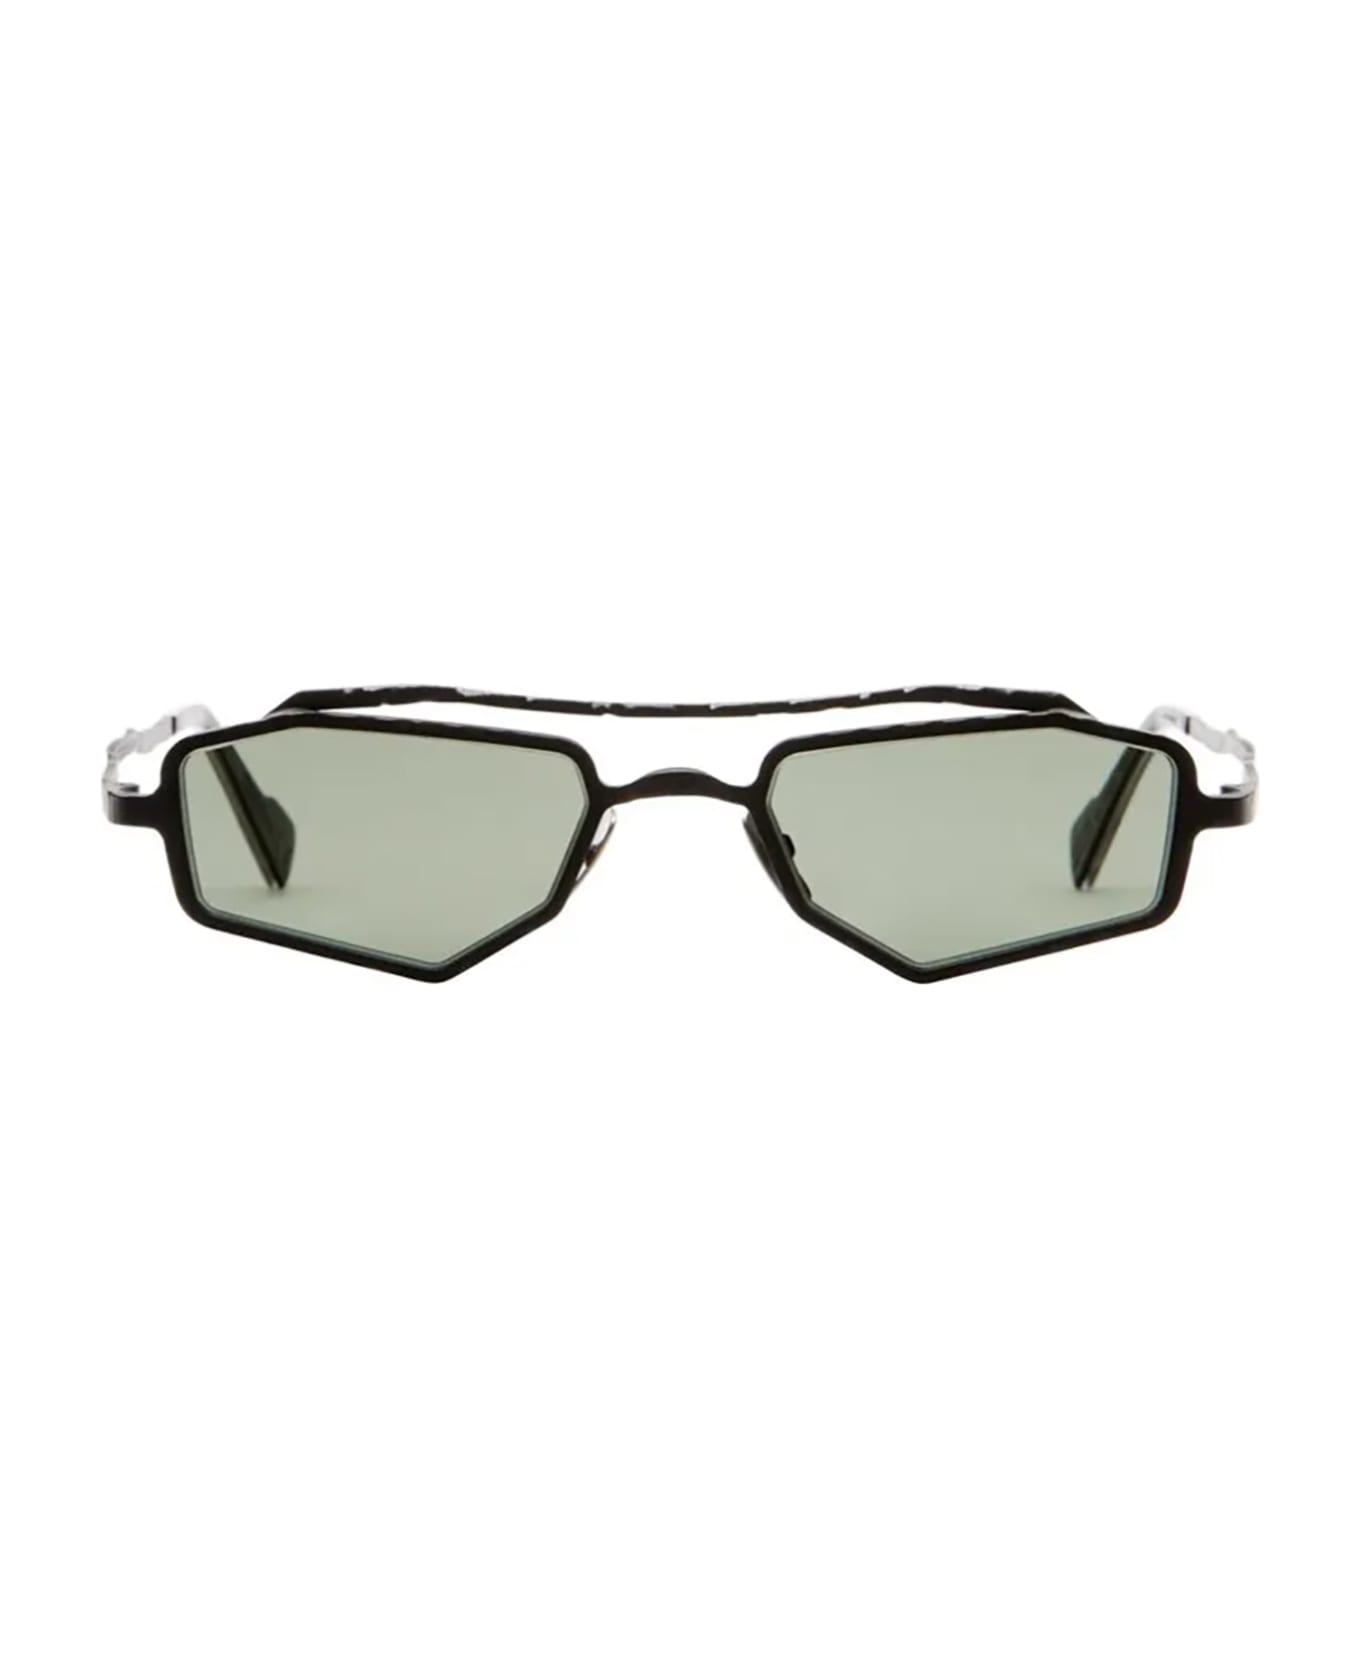 Kuboraum Z23 Sunglasses - Bmf Green サングラス